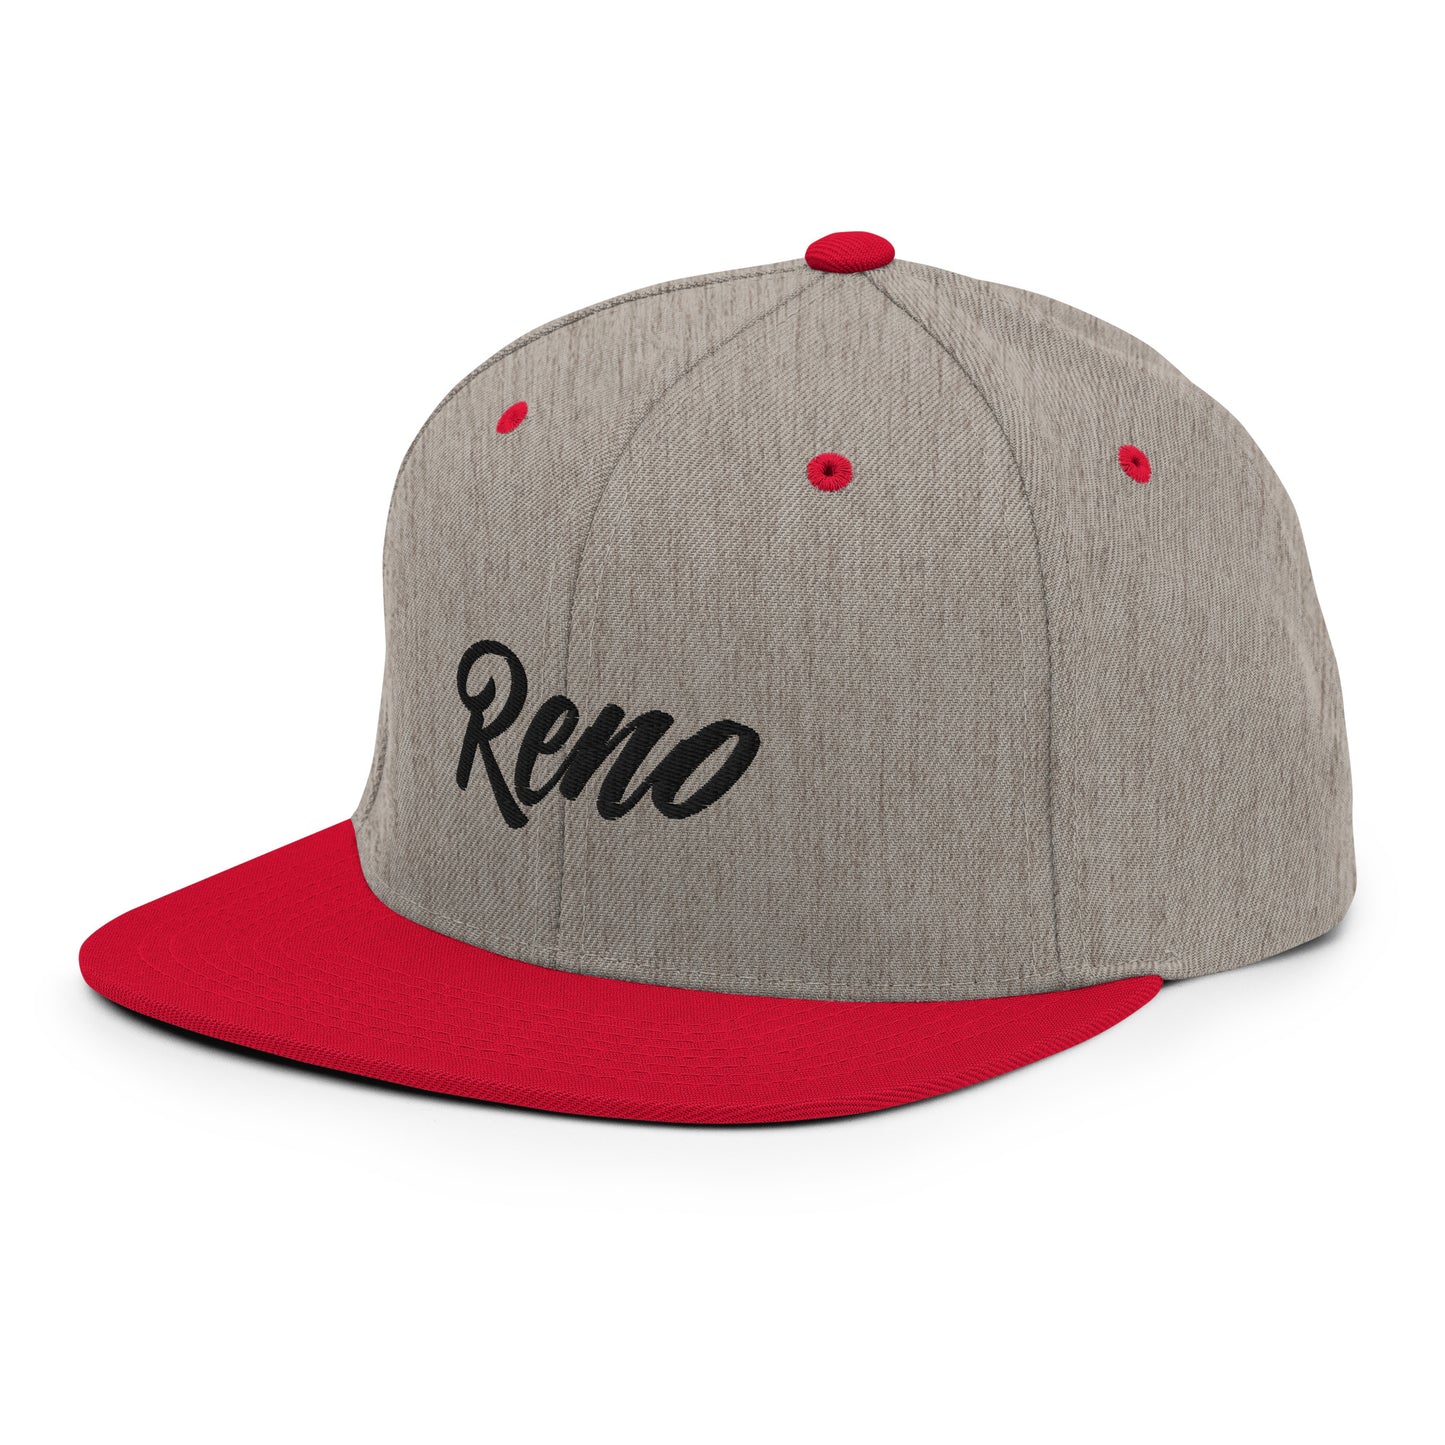 Reno Snapback Hat 10